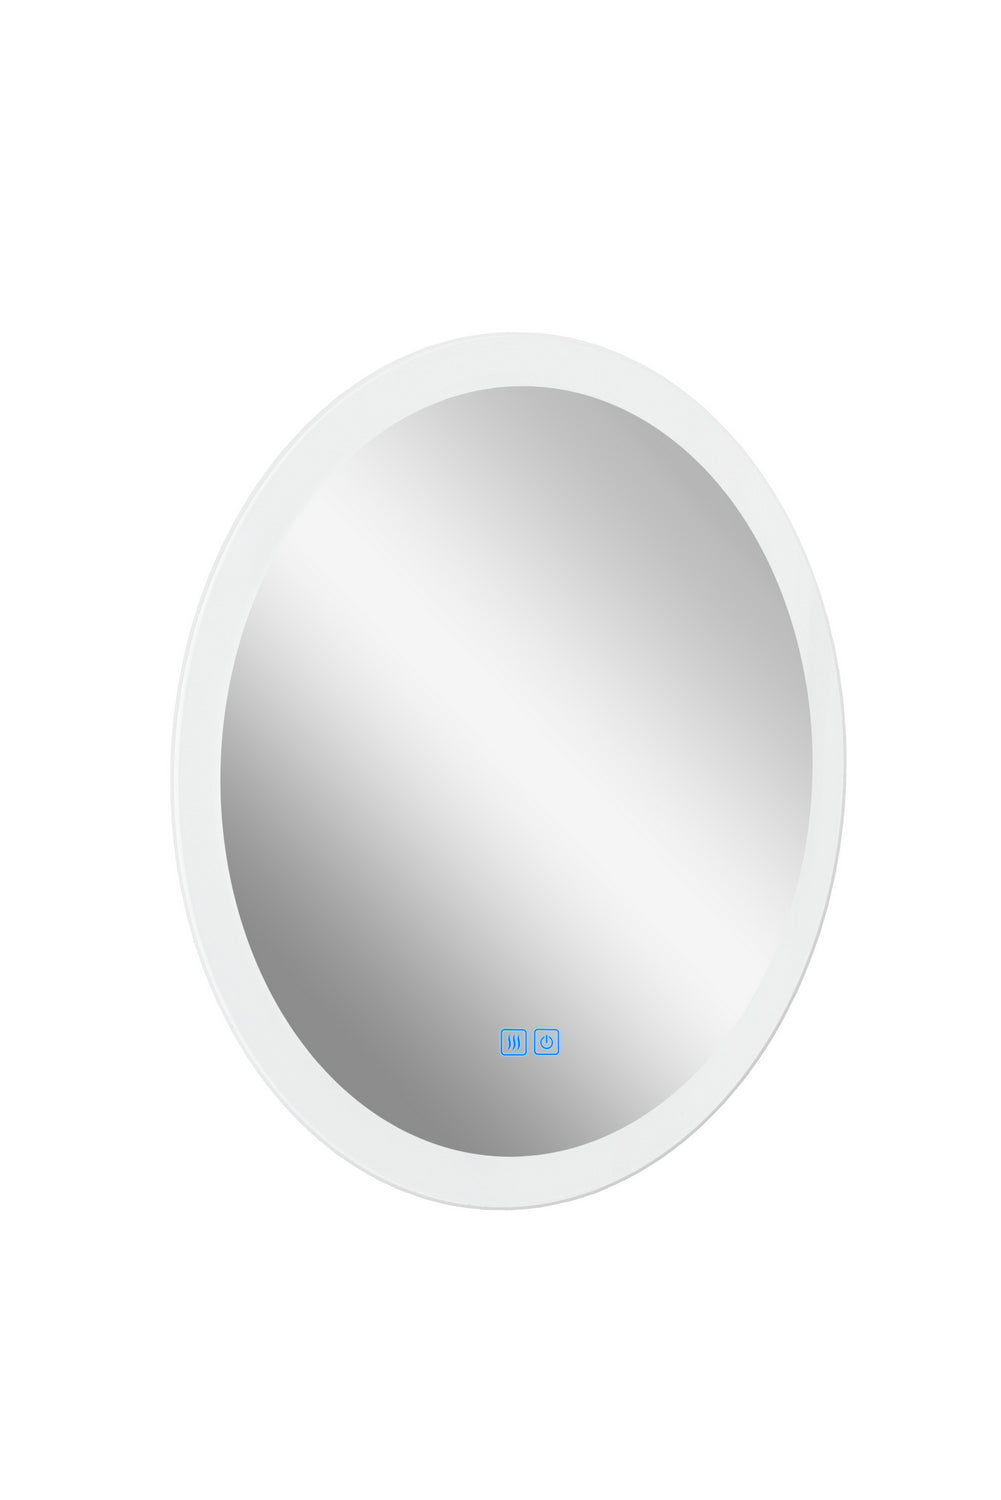 CWI Lighting - 1235W24 - LED Mirror - Armanno - White